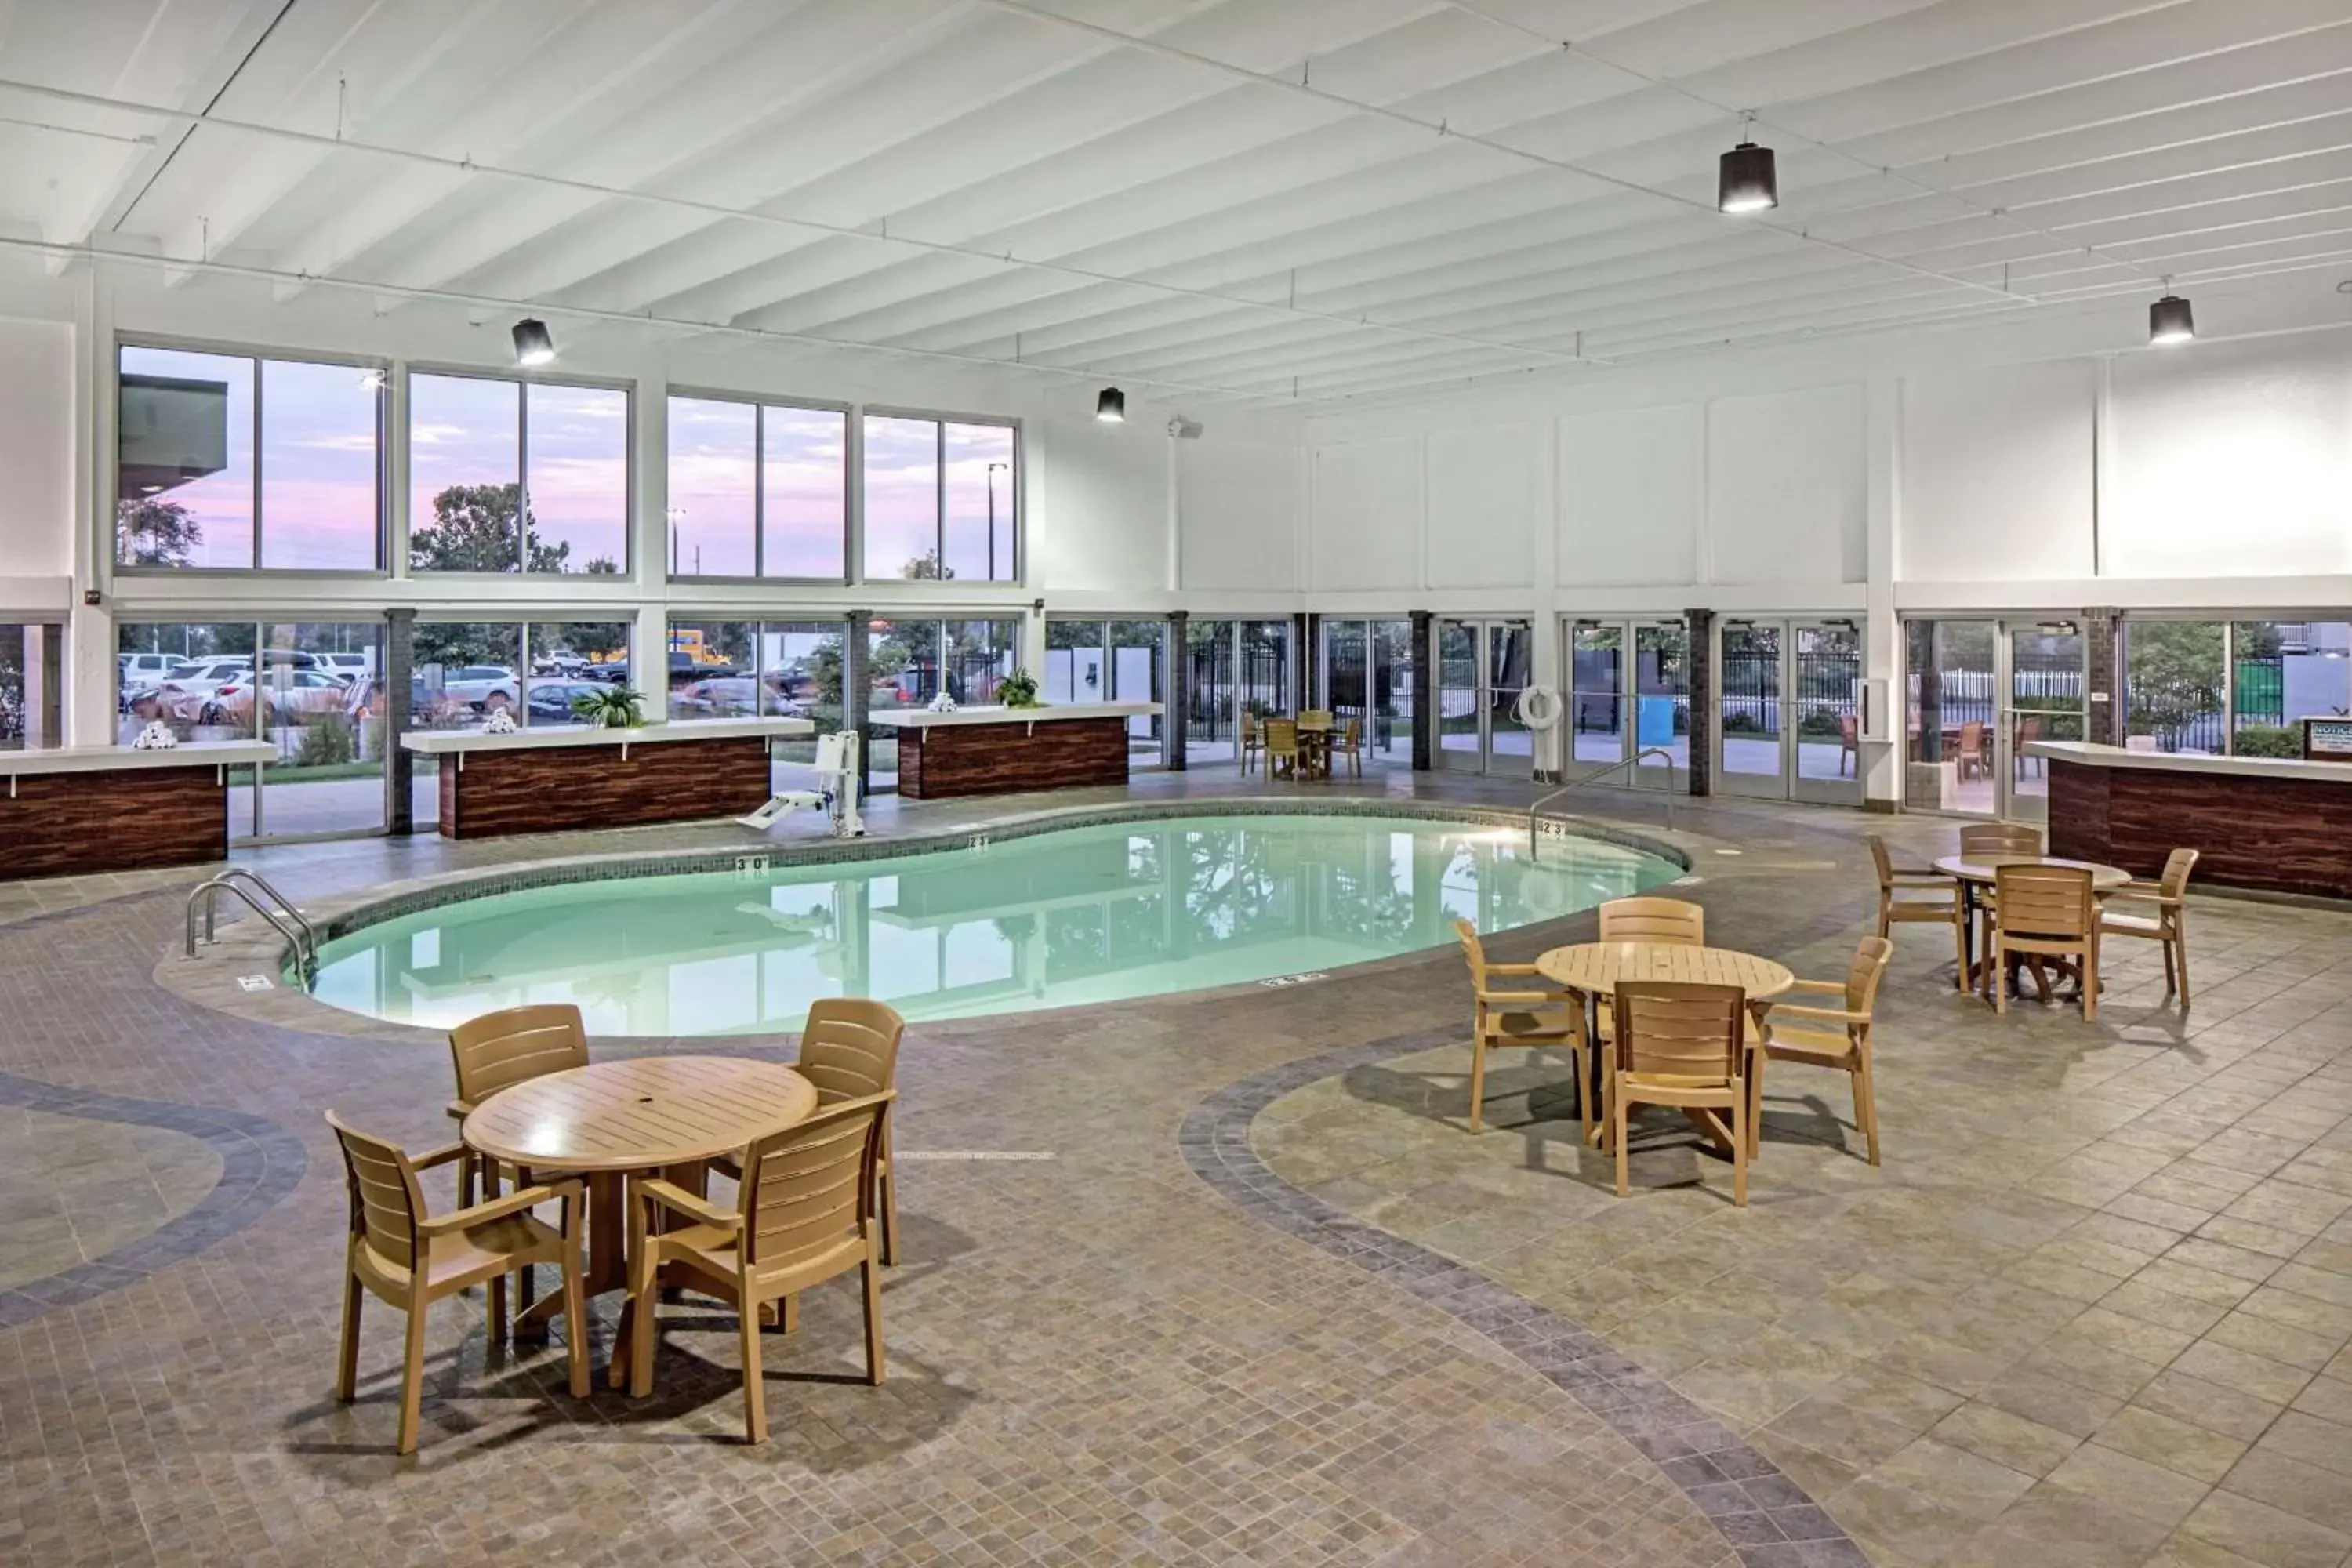 Pool view in Doubletree By Hilton Omaha Southwest, Ne